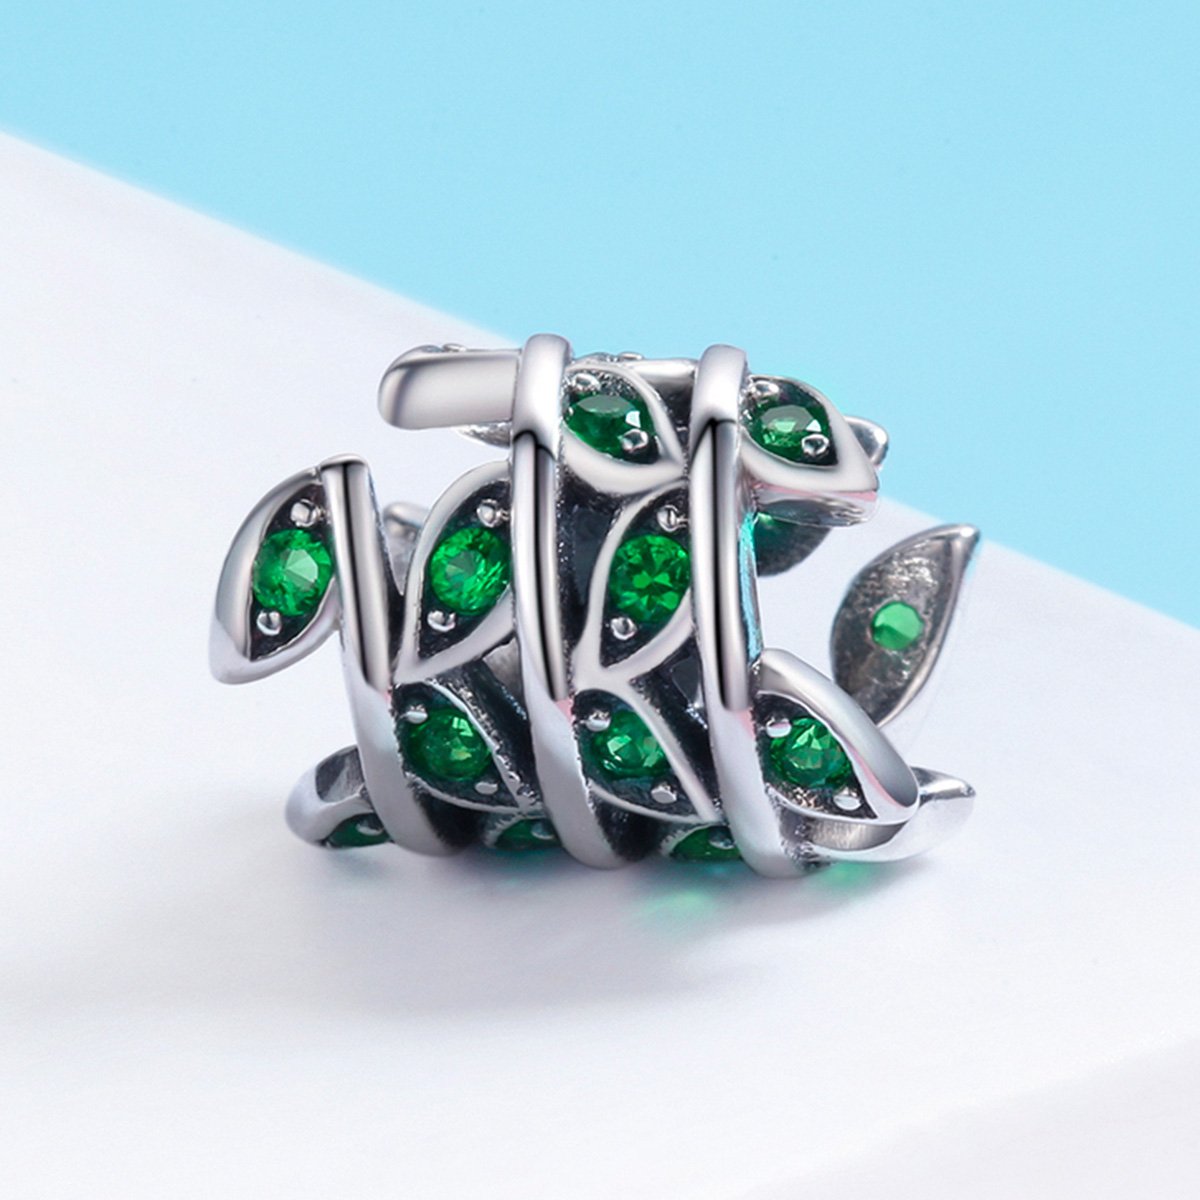 Sterling 925 silver charm the green grass bead pendant fits Pandora charm and European charm bracelet Xaxe.com